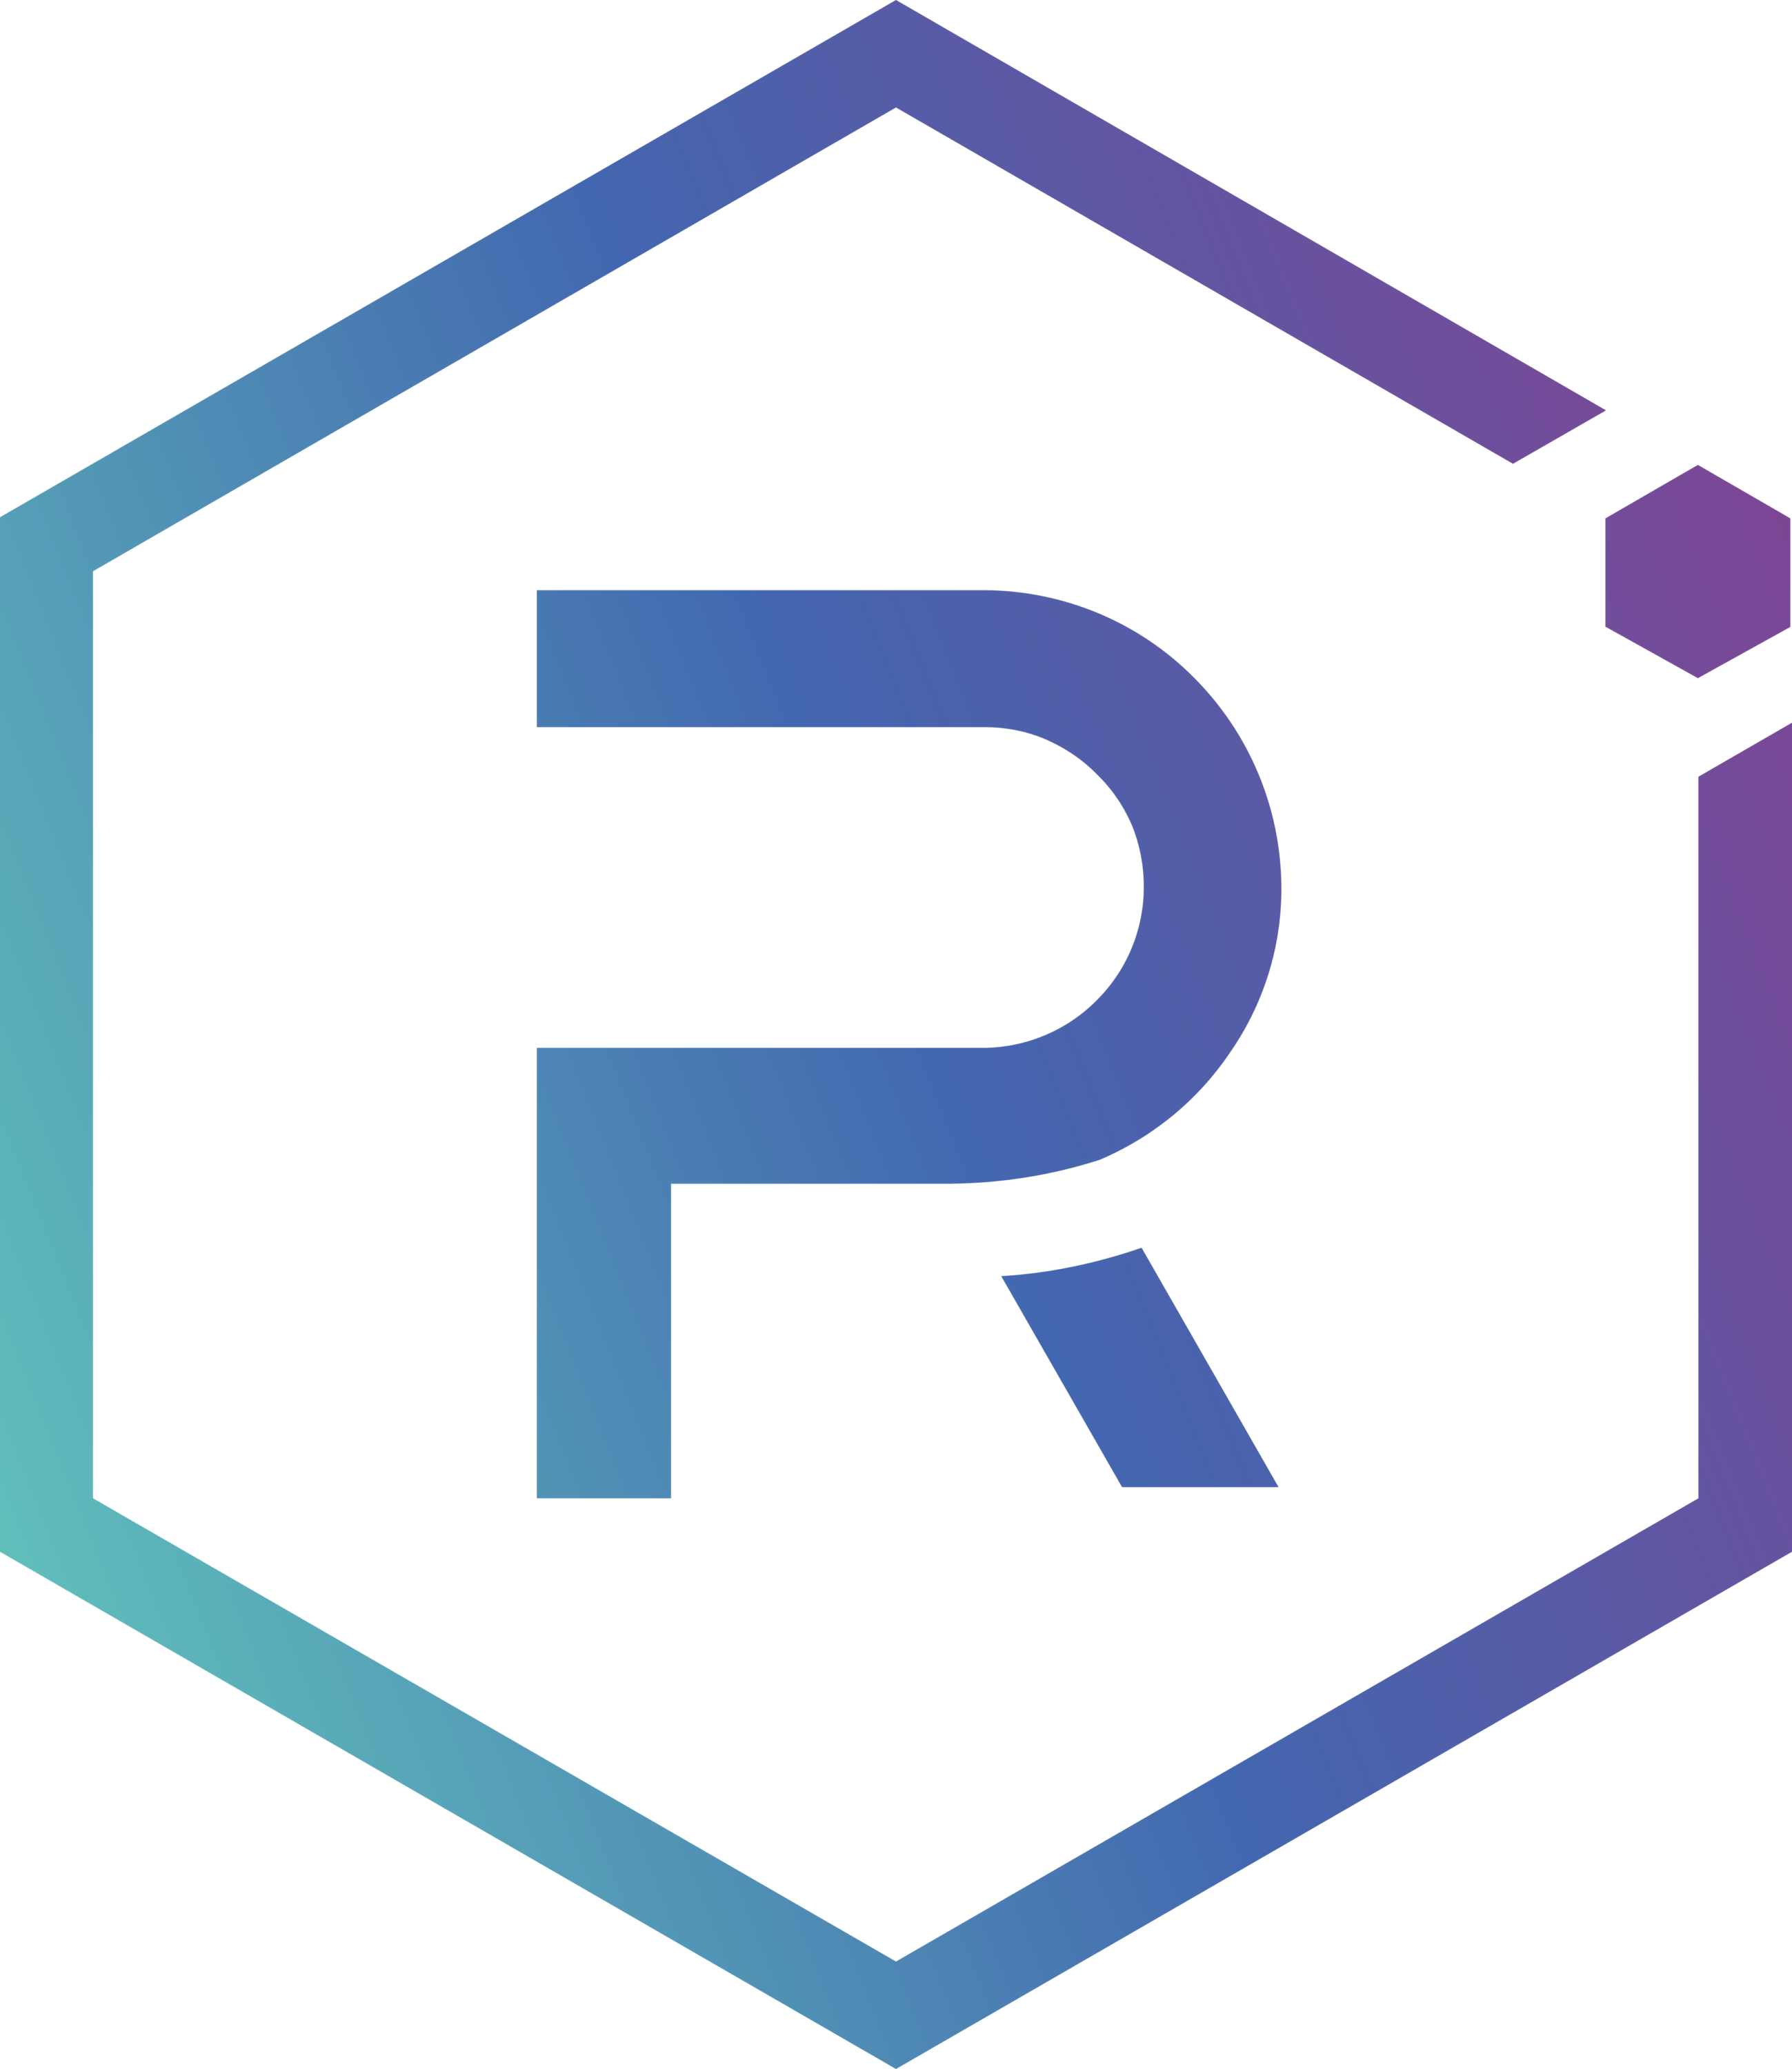 Raydium (RAY) Logo